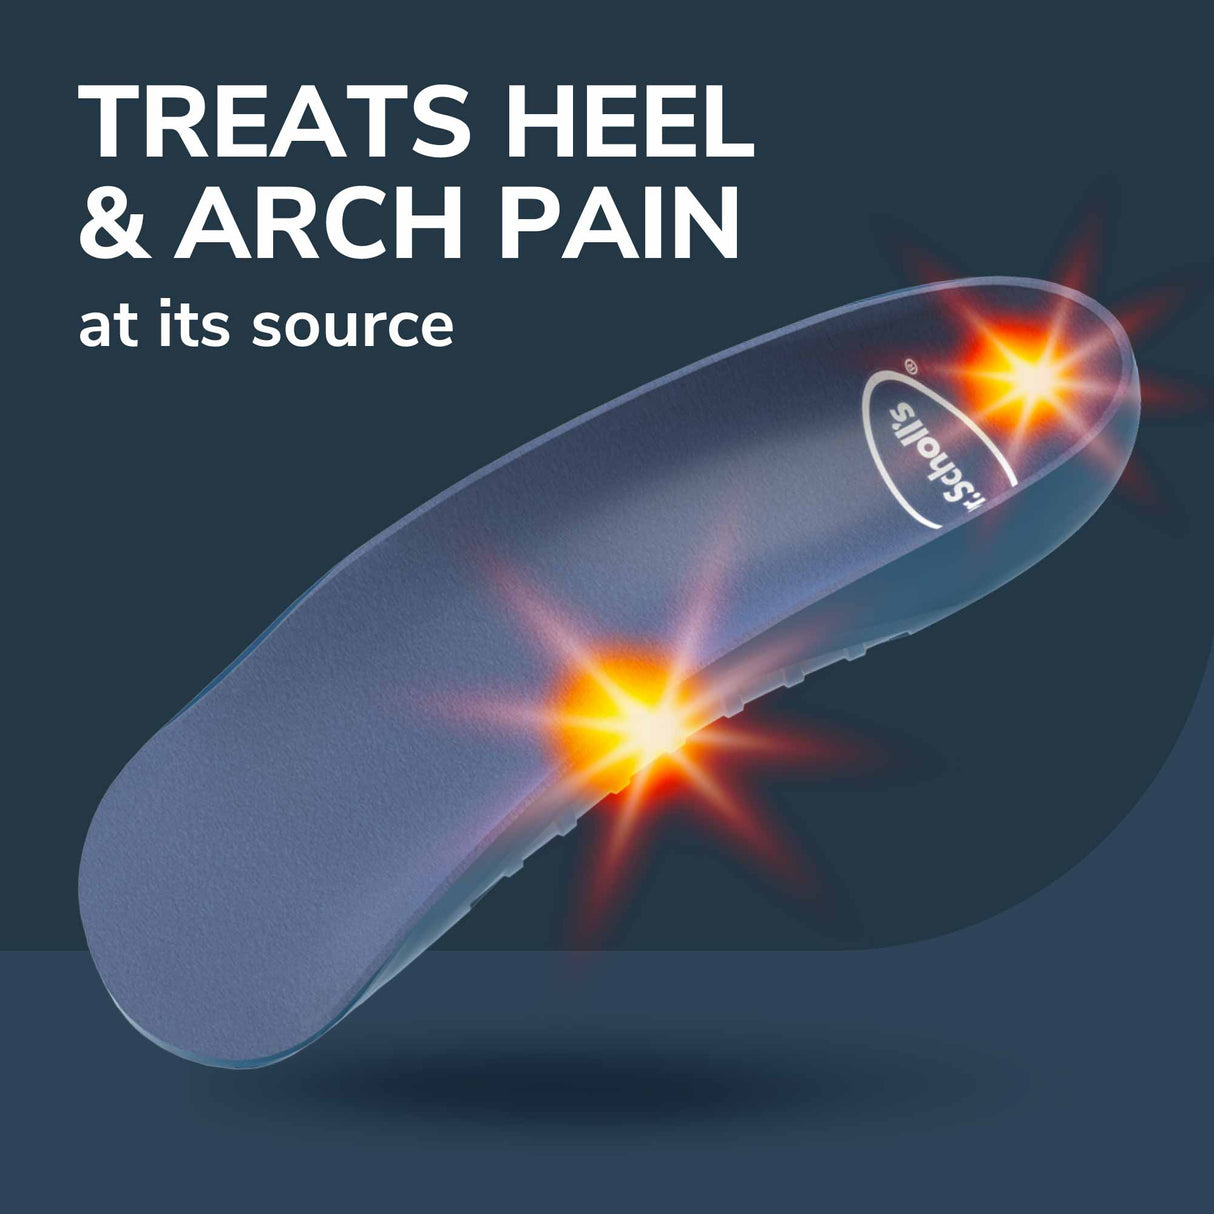 image of the treats heel & arch pain